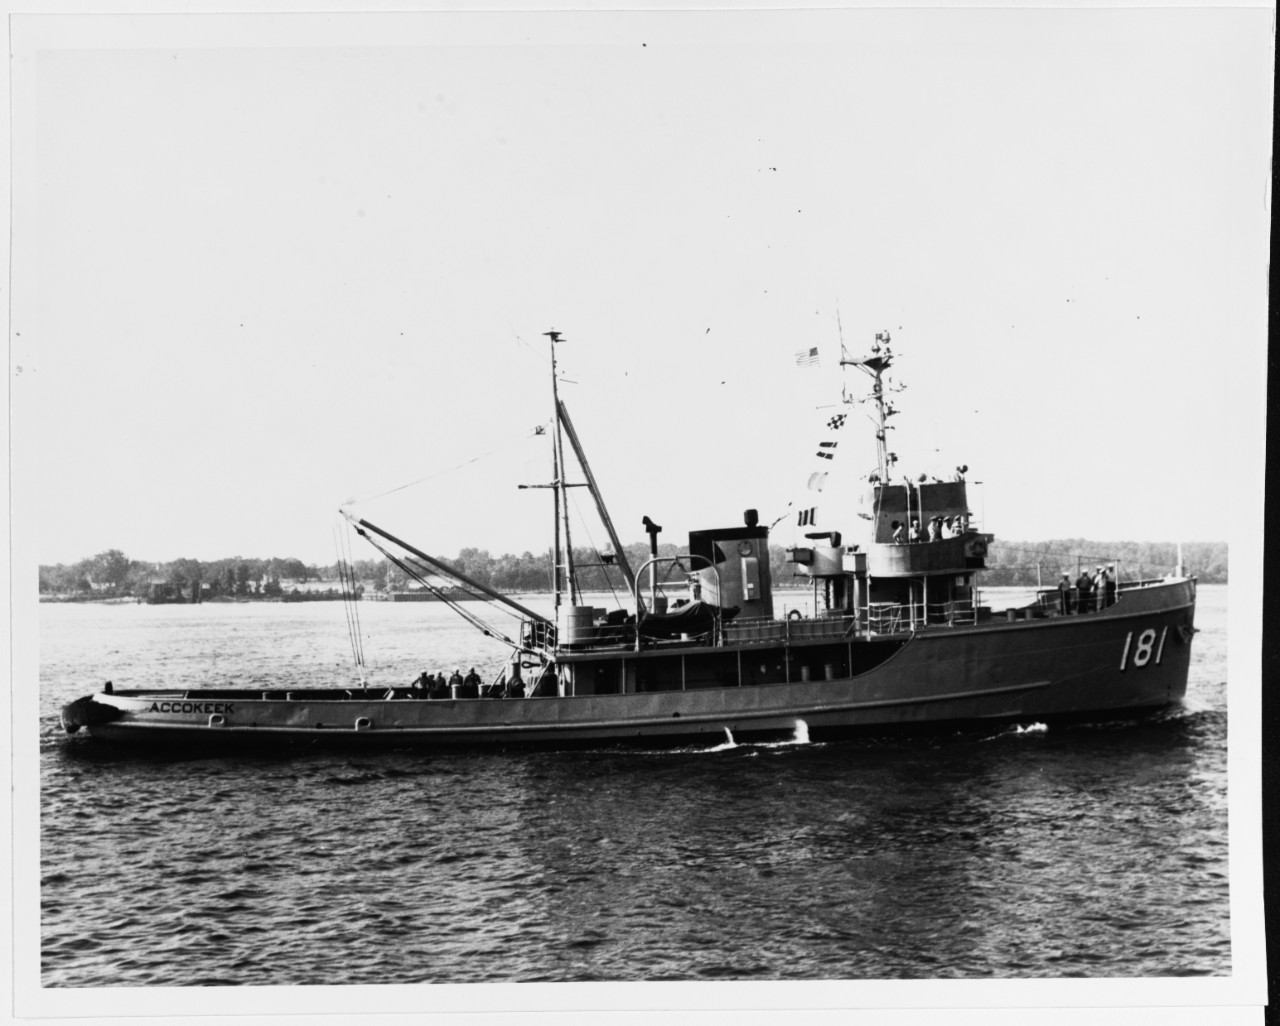 USS ACCOKEEK (ATA-181)